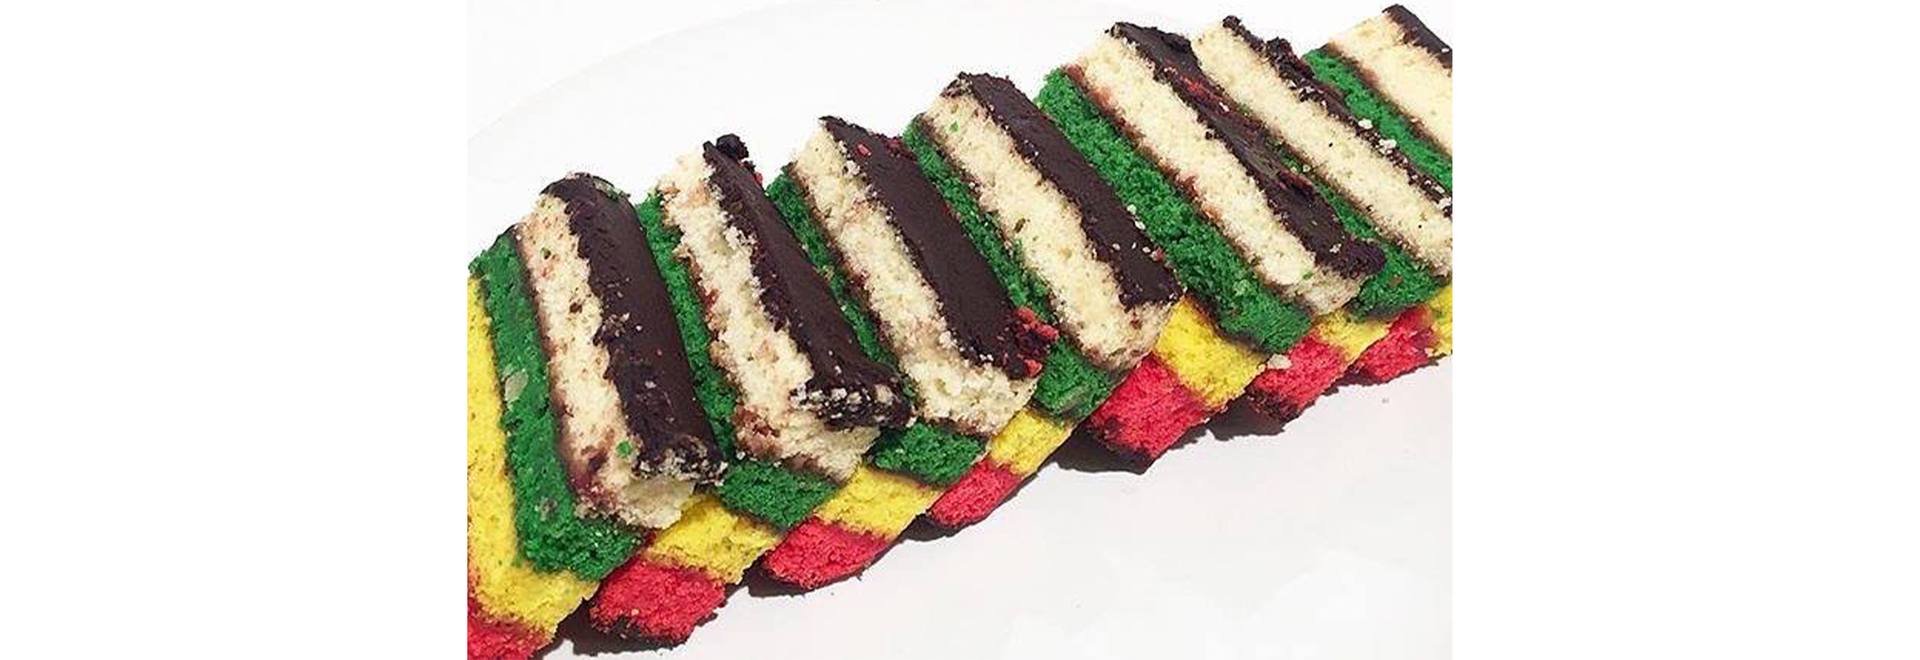 Green cakes - rainbow cake